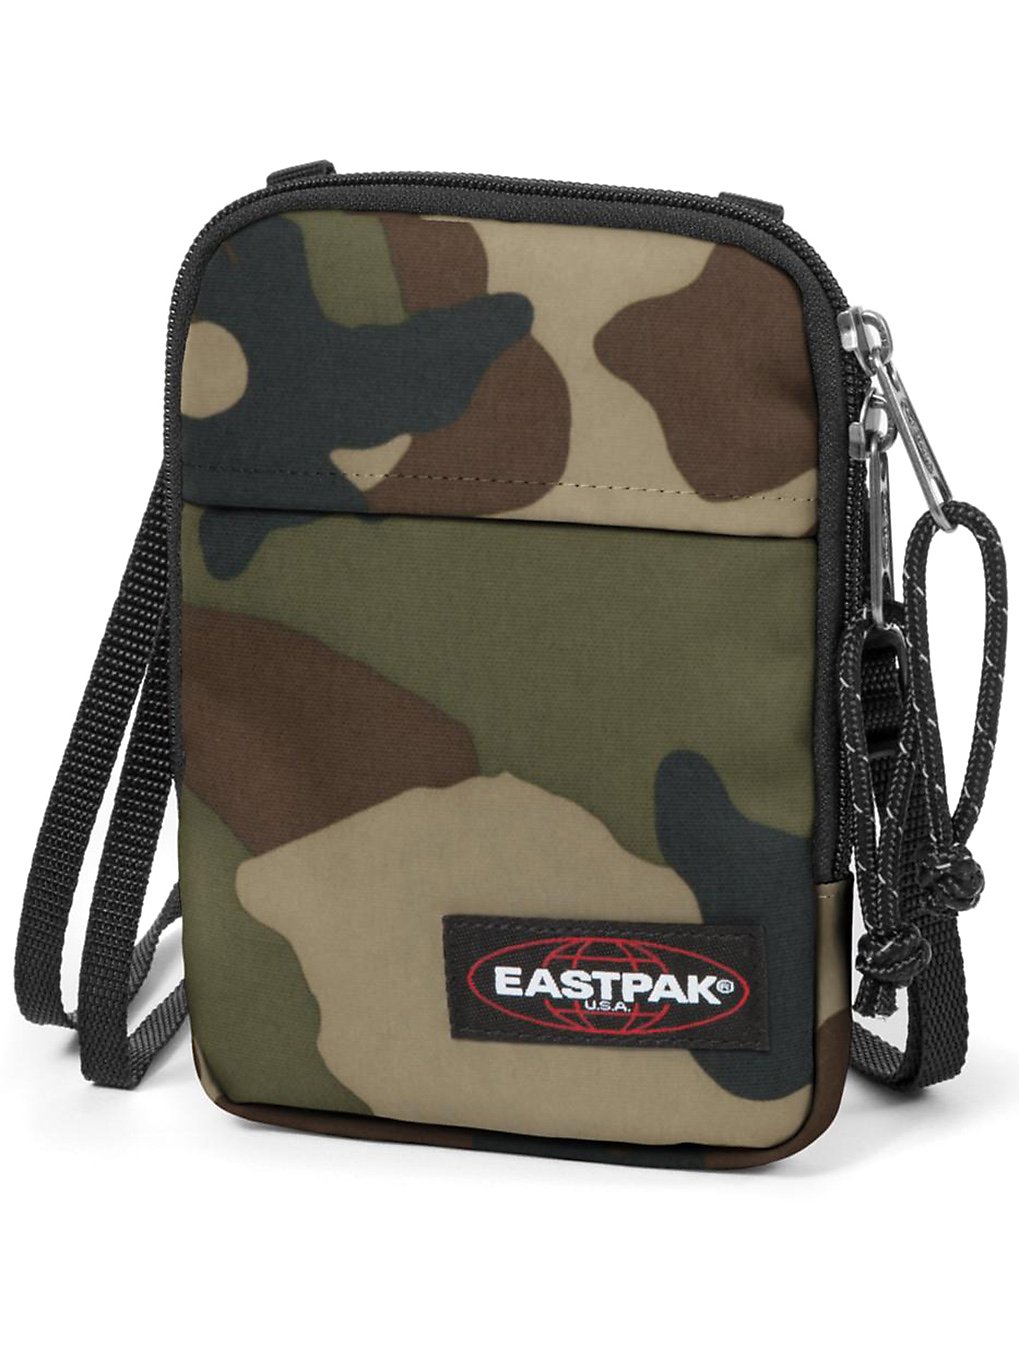 Eastpak Buddy Bag camouflage